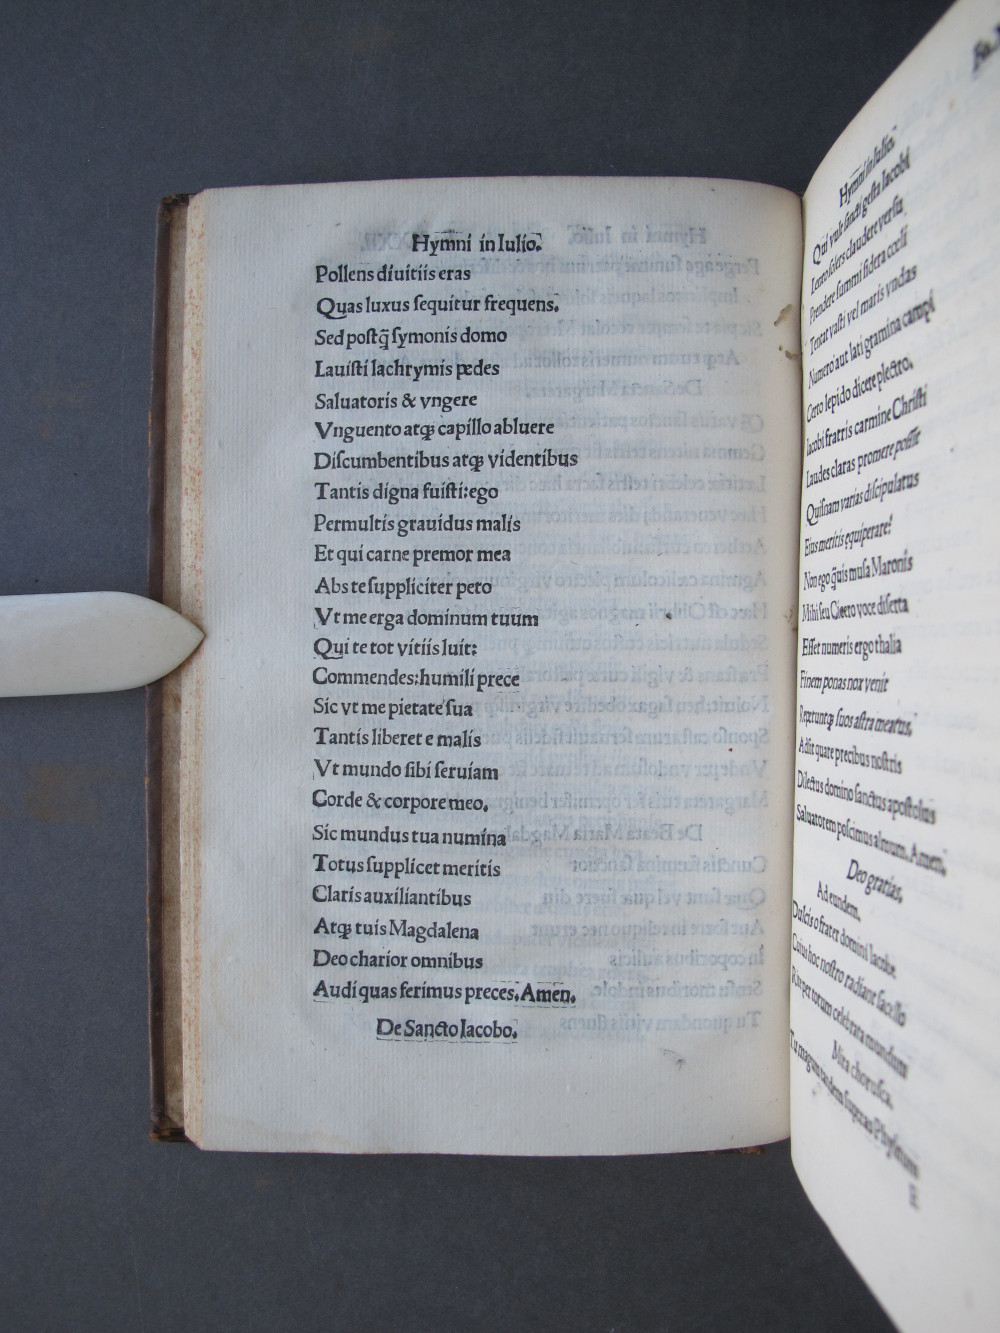 Folio 32 verso